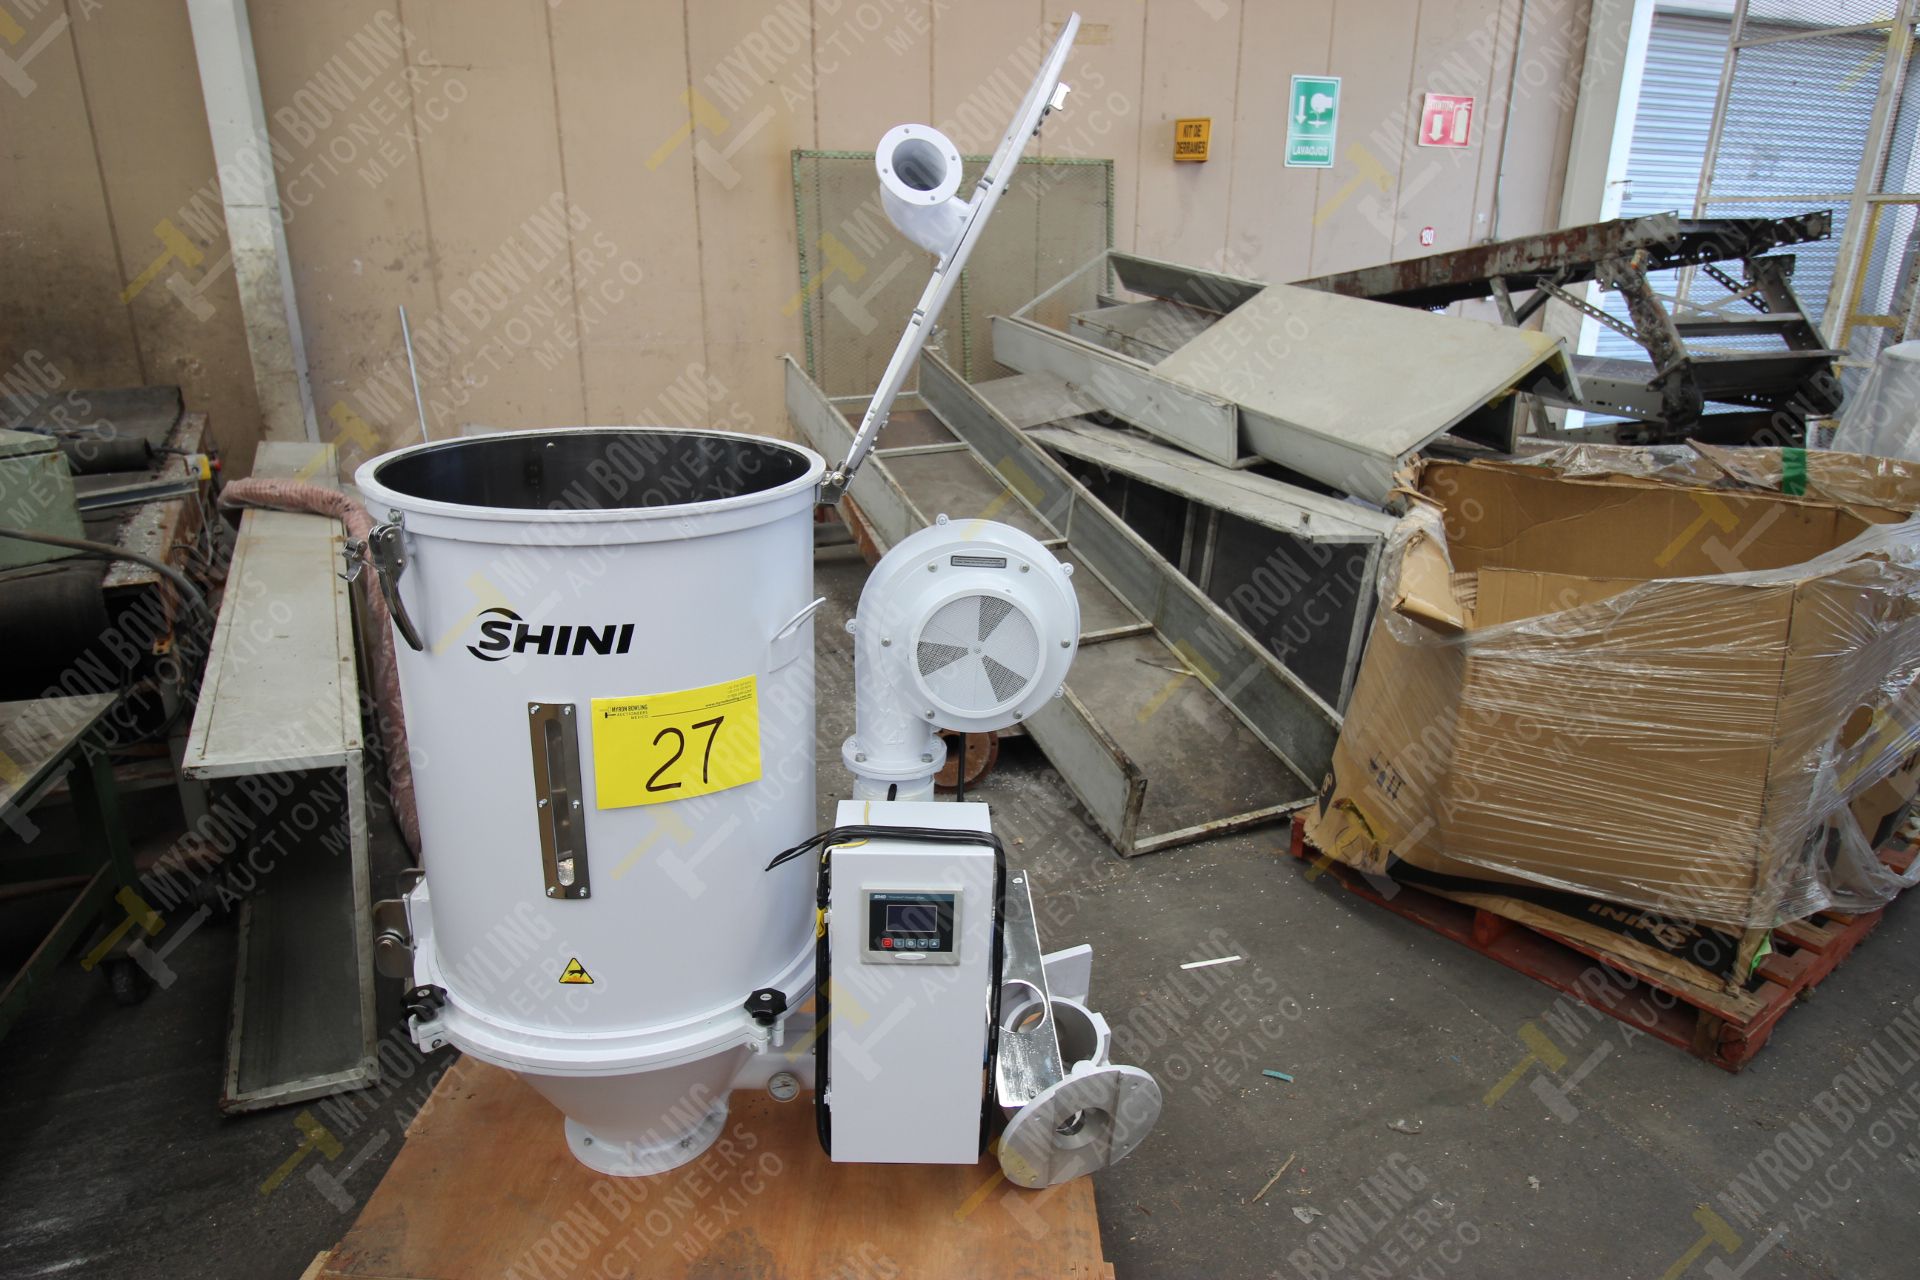 Shini Plastics Technologies 100kg. hopper dryer mod. SHD-100SL-CE, serial number 2HD16100392 - Image 11 of 11